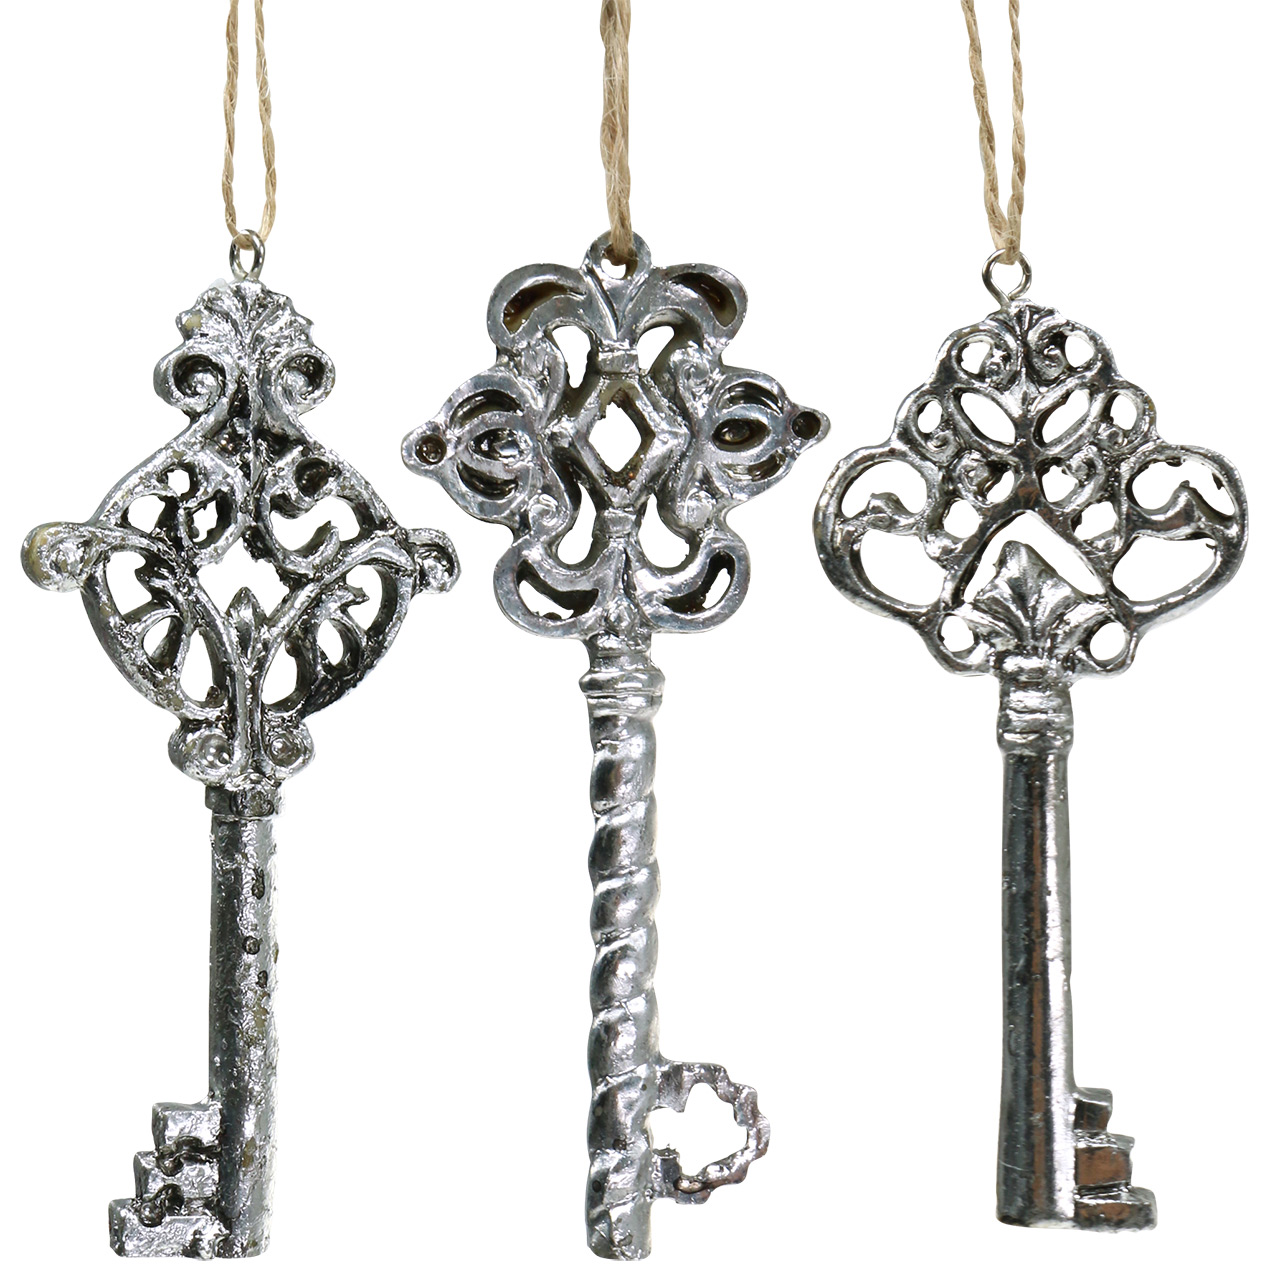 Deko Schlüssel zum Hängen Antik Silber 10cm  3St-450826-000-138